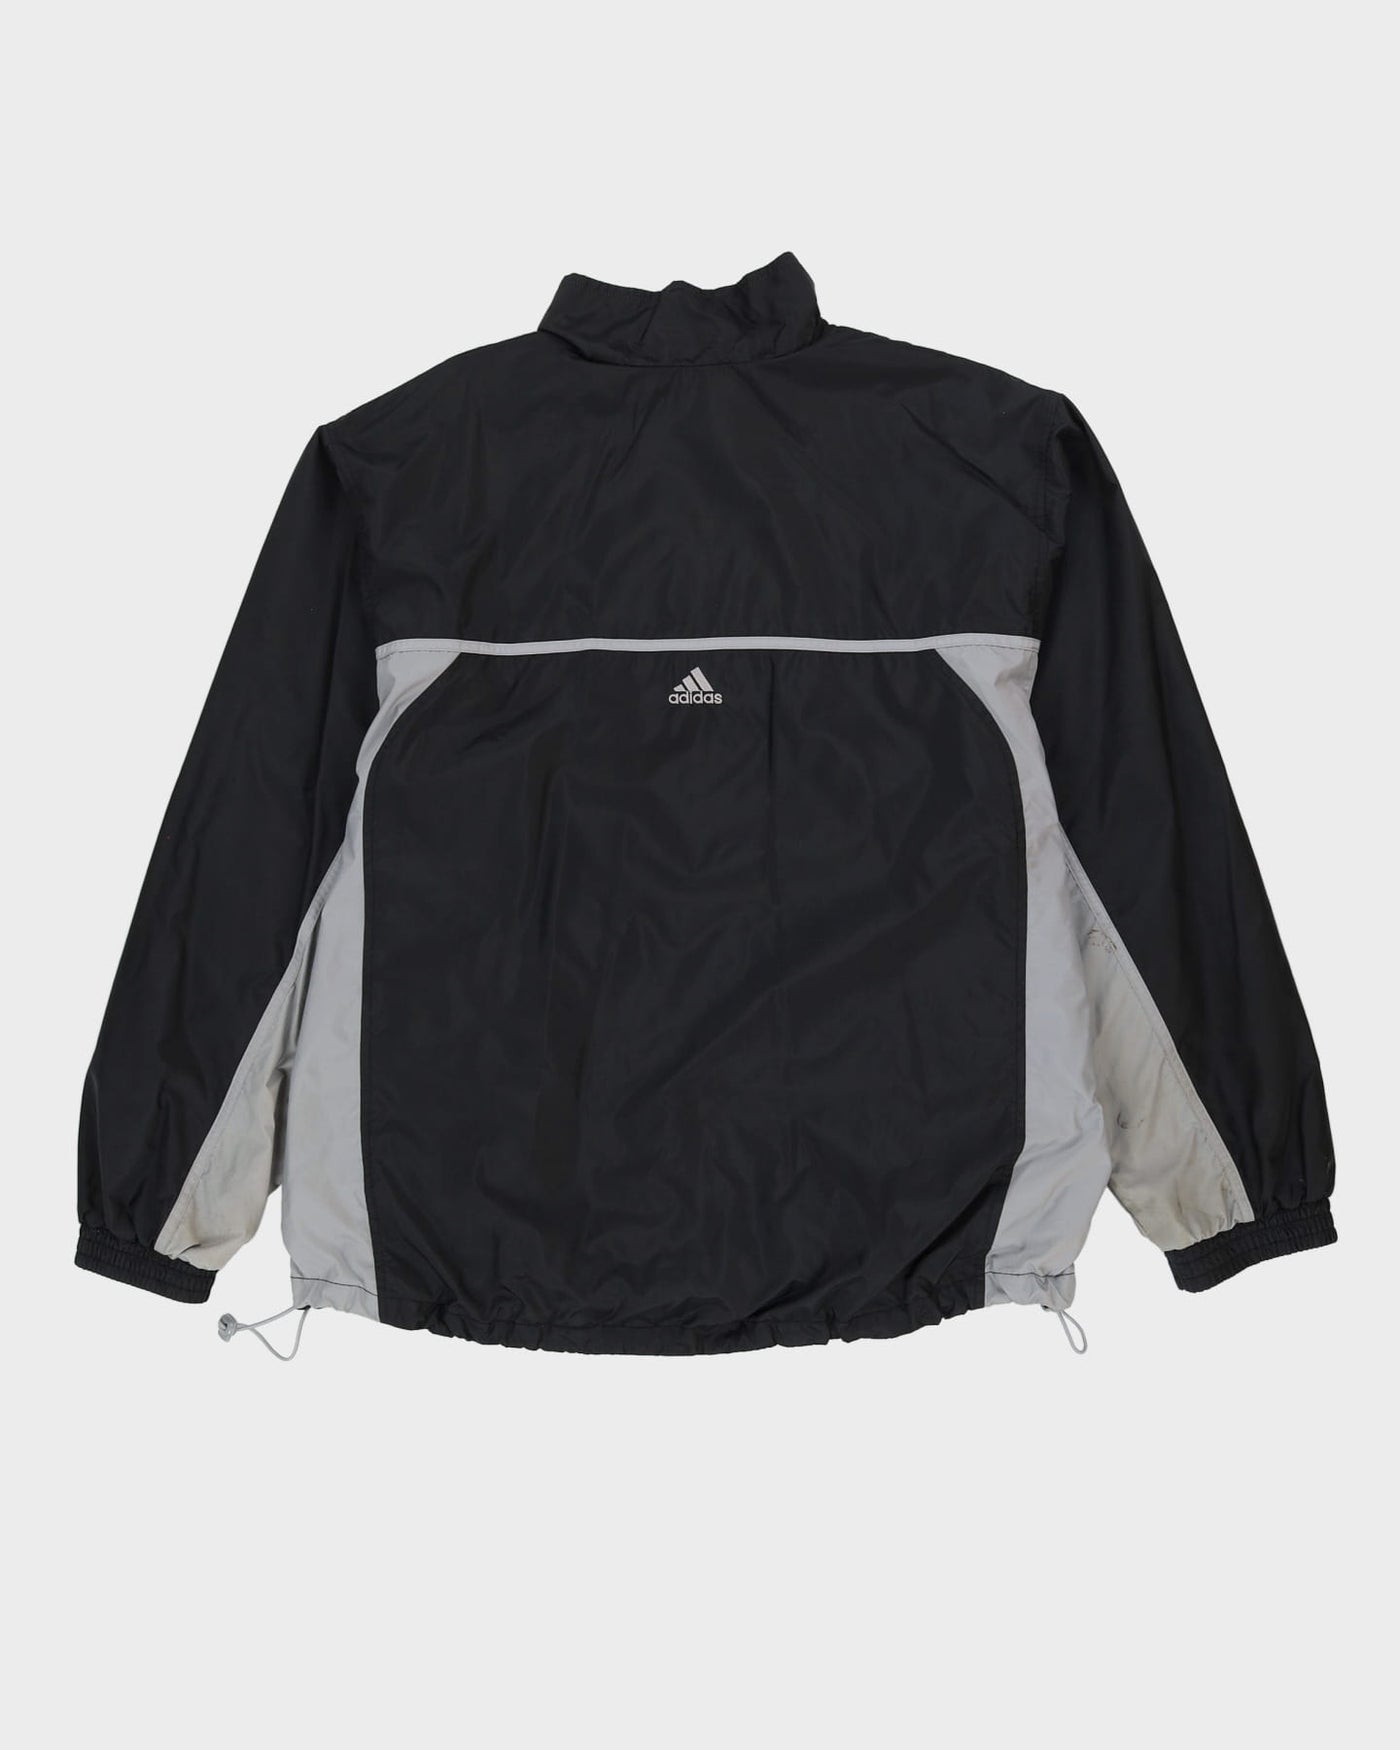 Vintage 90s Adidas Black Full Zip Windbreaker - XL